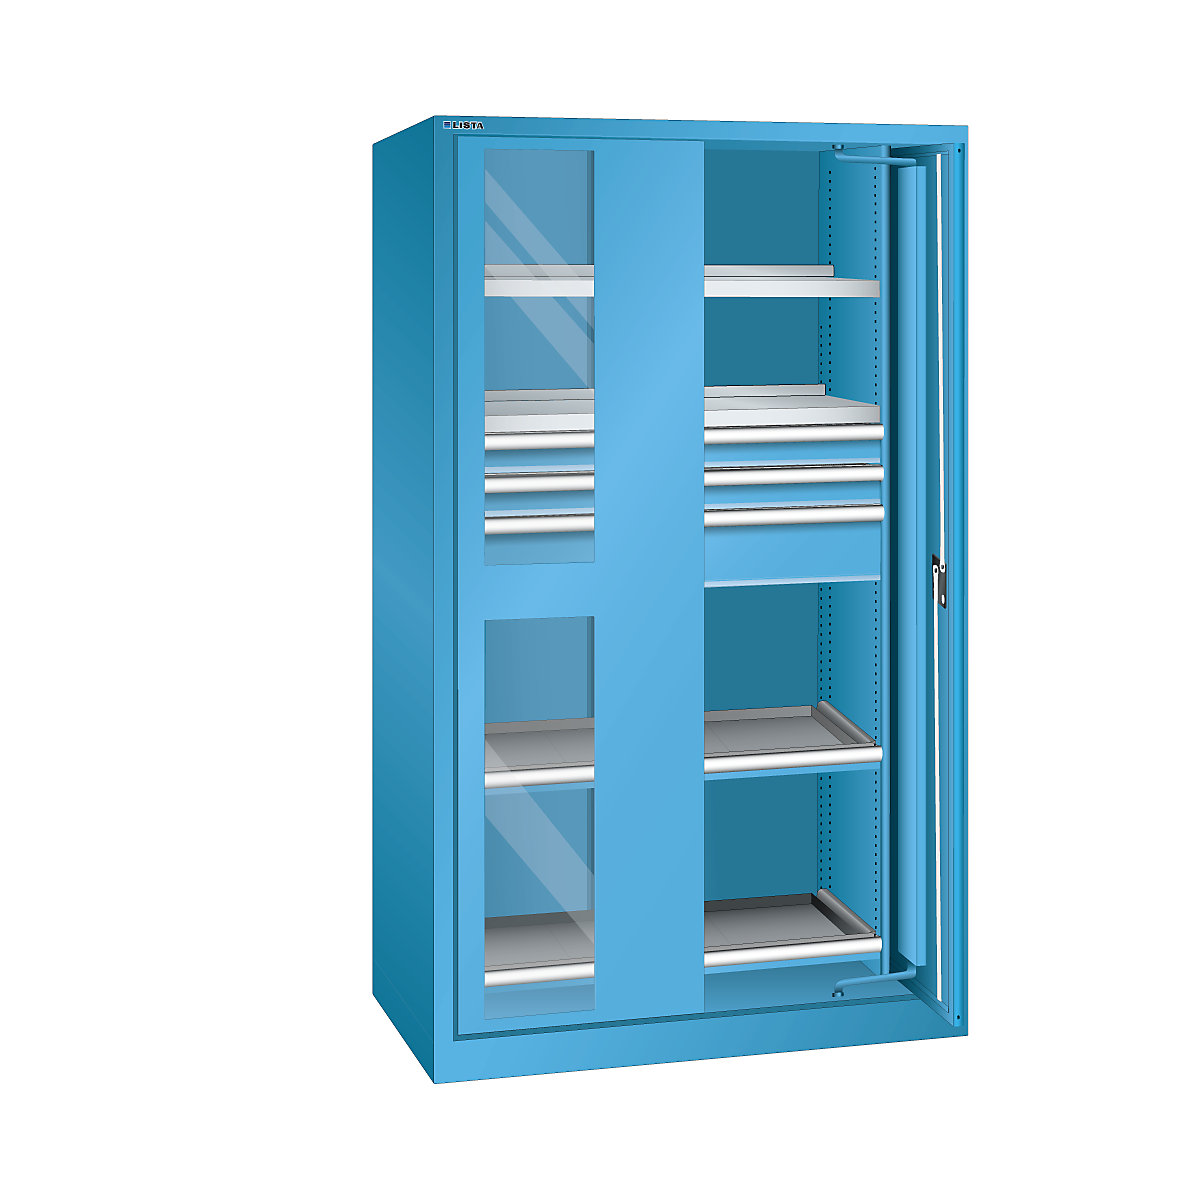 Heavy duty flush door cupboard – LISTA, 3 drawers, 4 shelves, with vision panel doors, light blue-8